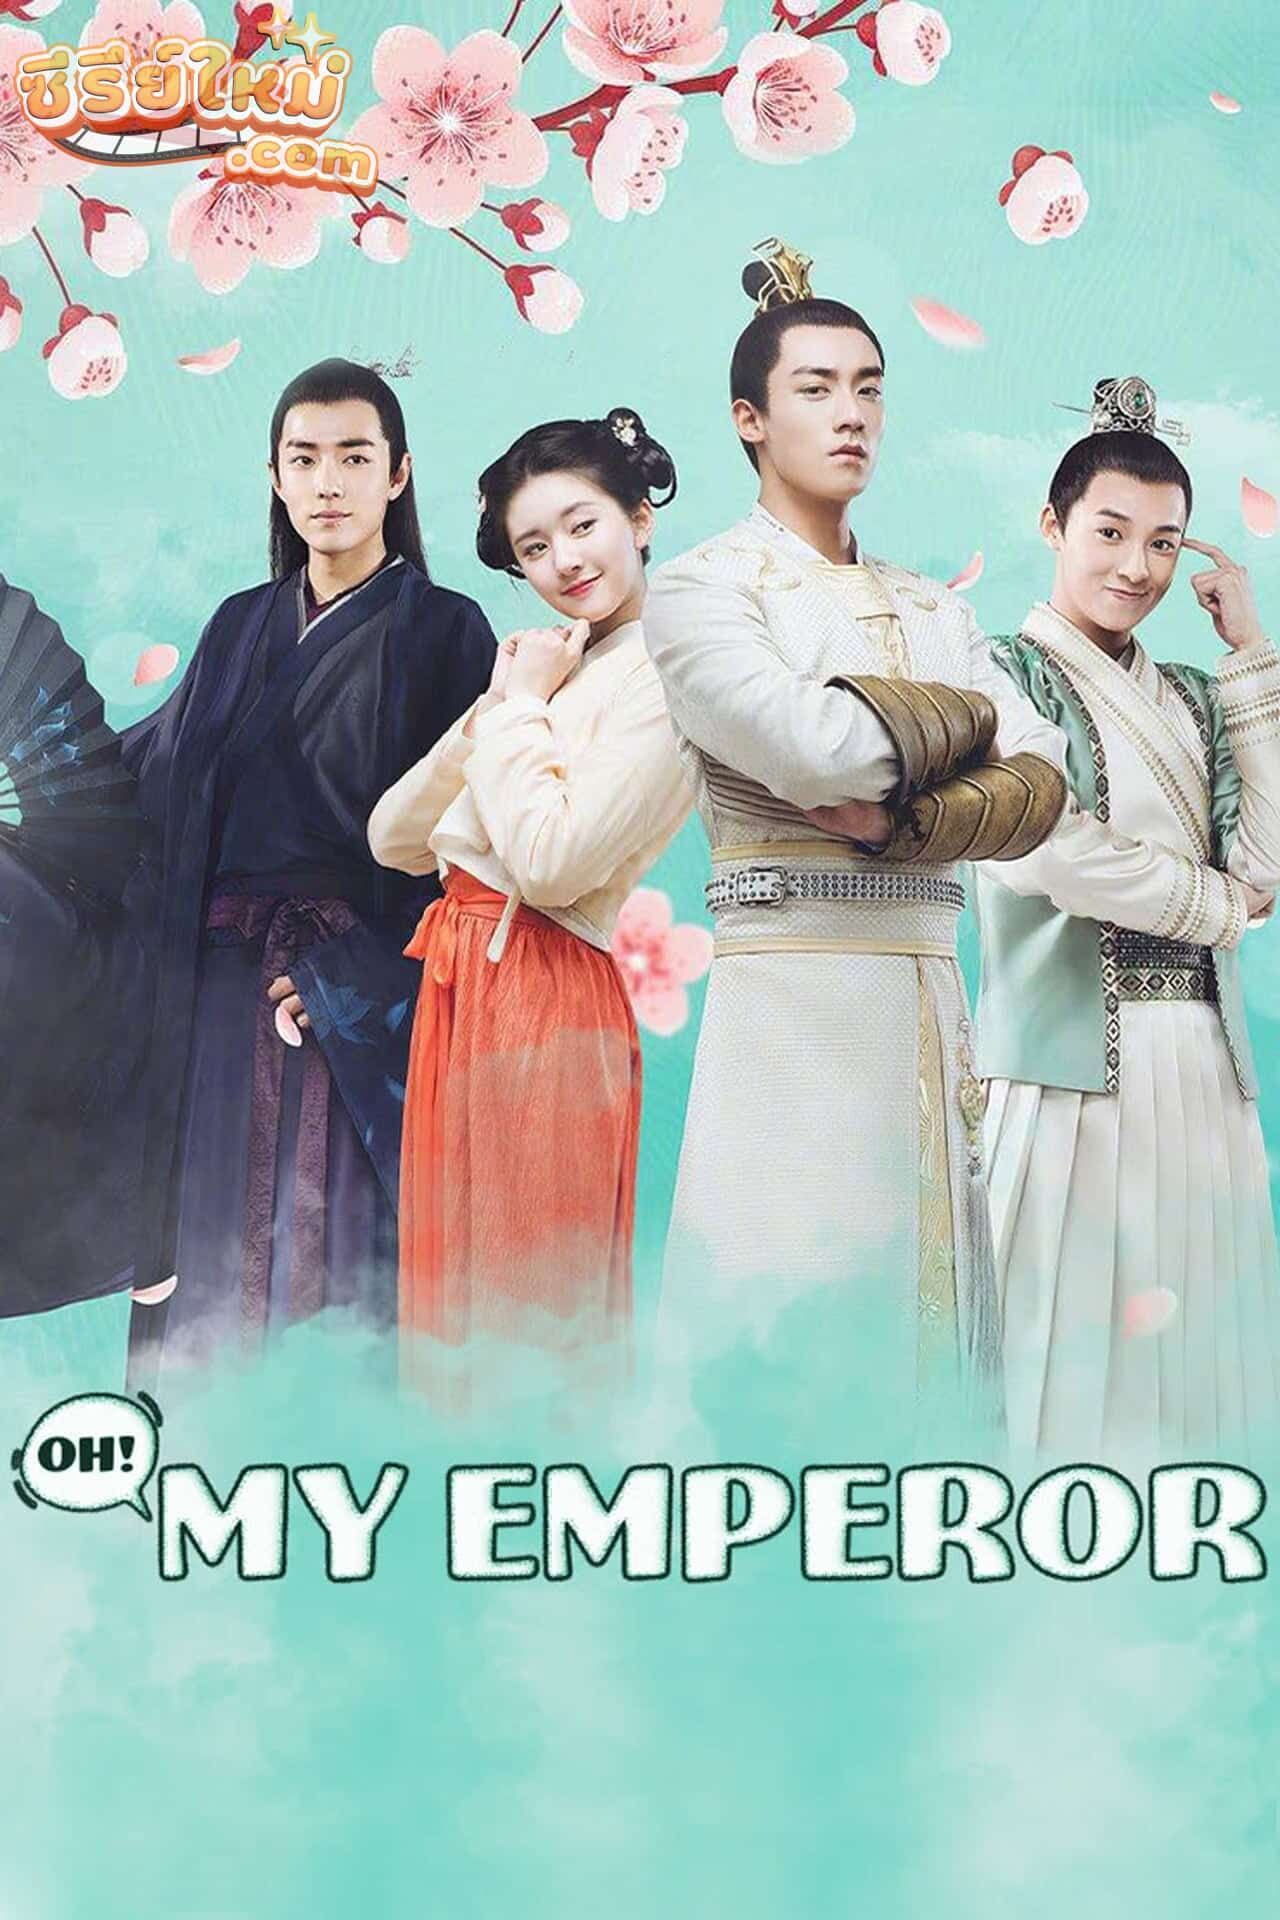 Oh! My Emperor ฮ่องเต้ที่รัก (2018)